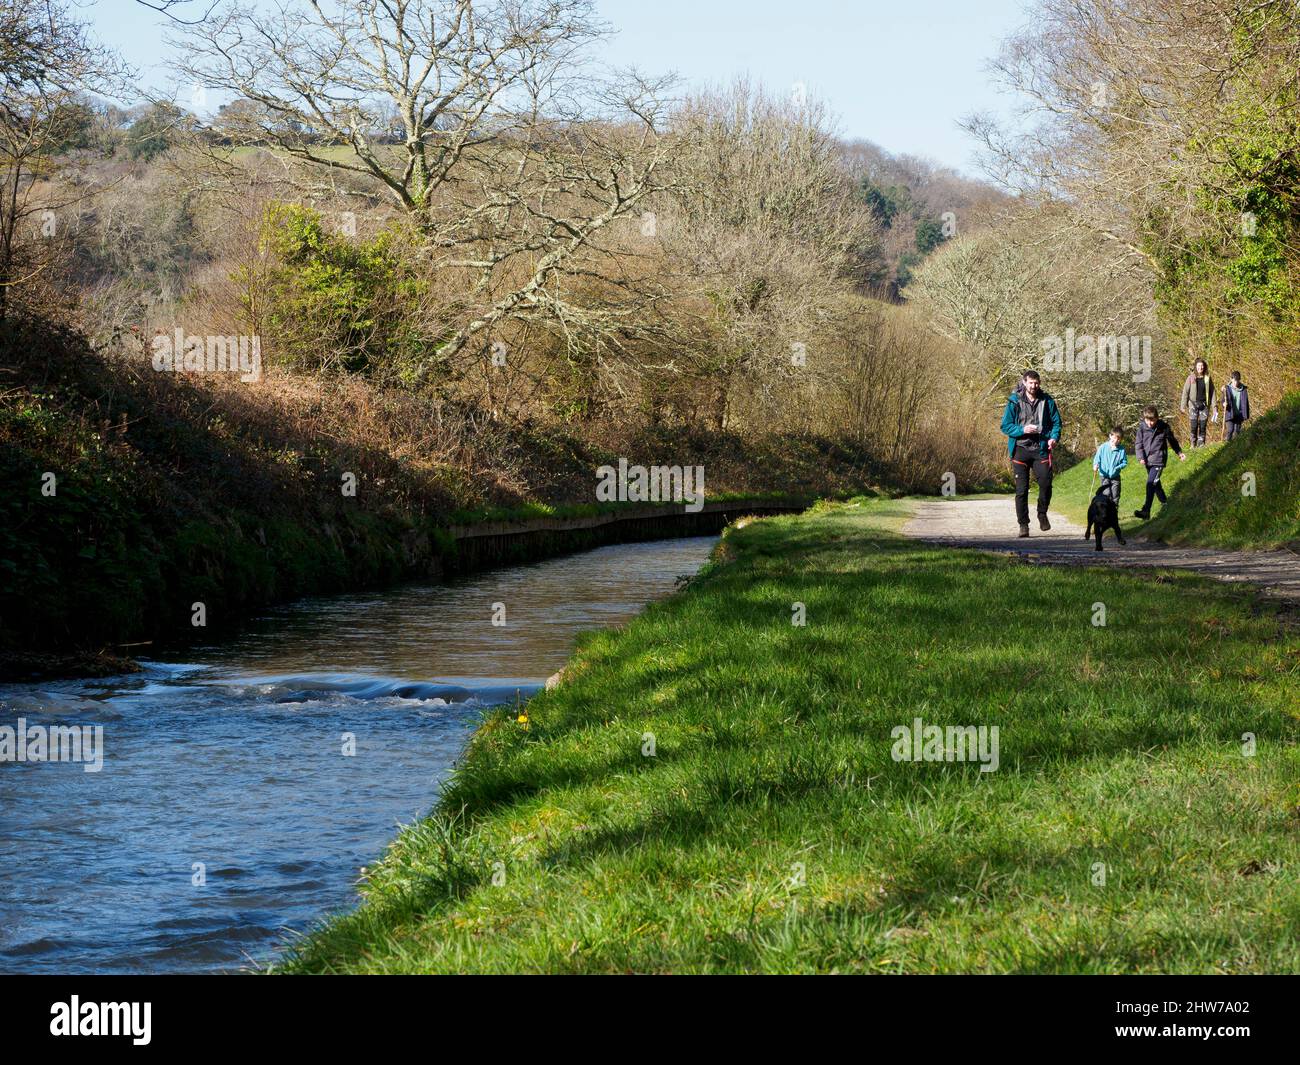 Family walking along the St Austell River during the February half term, Pentewan, Cornwall, UK Stock Photo